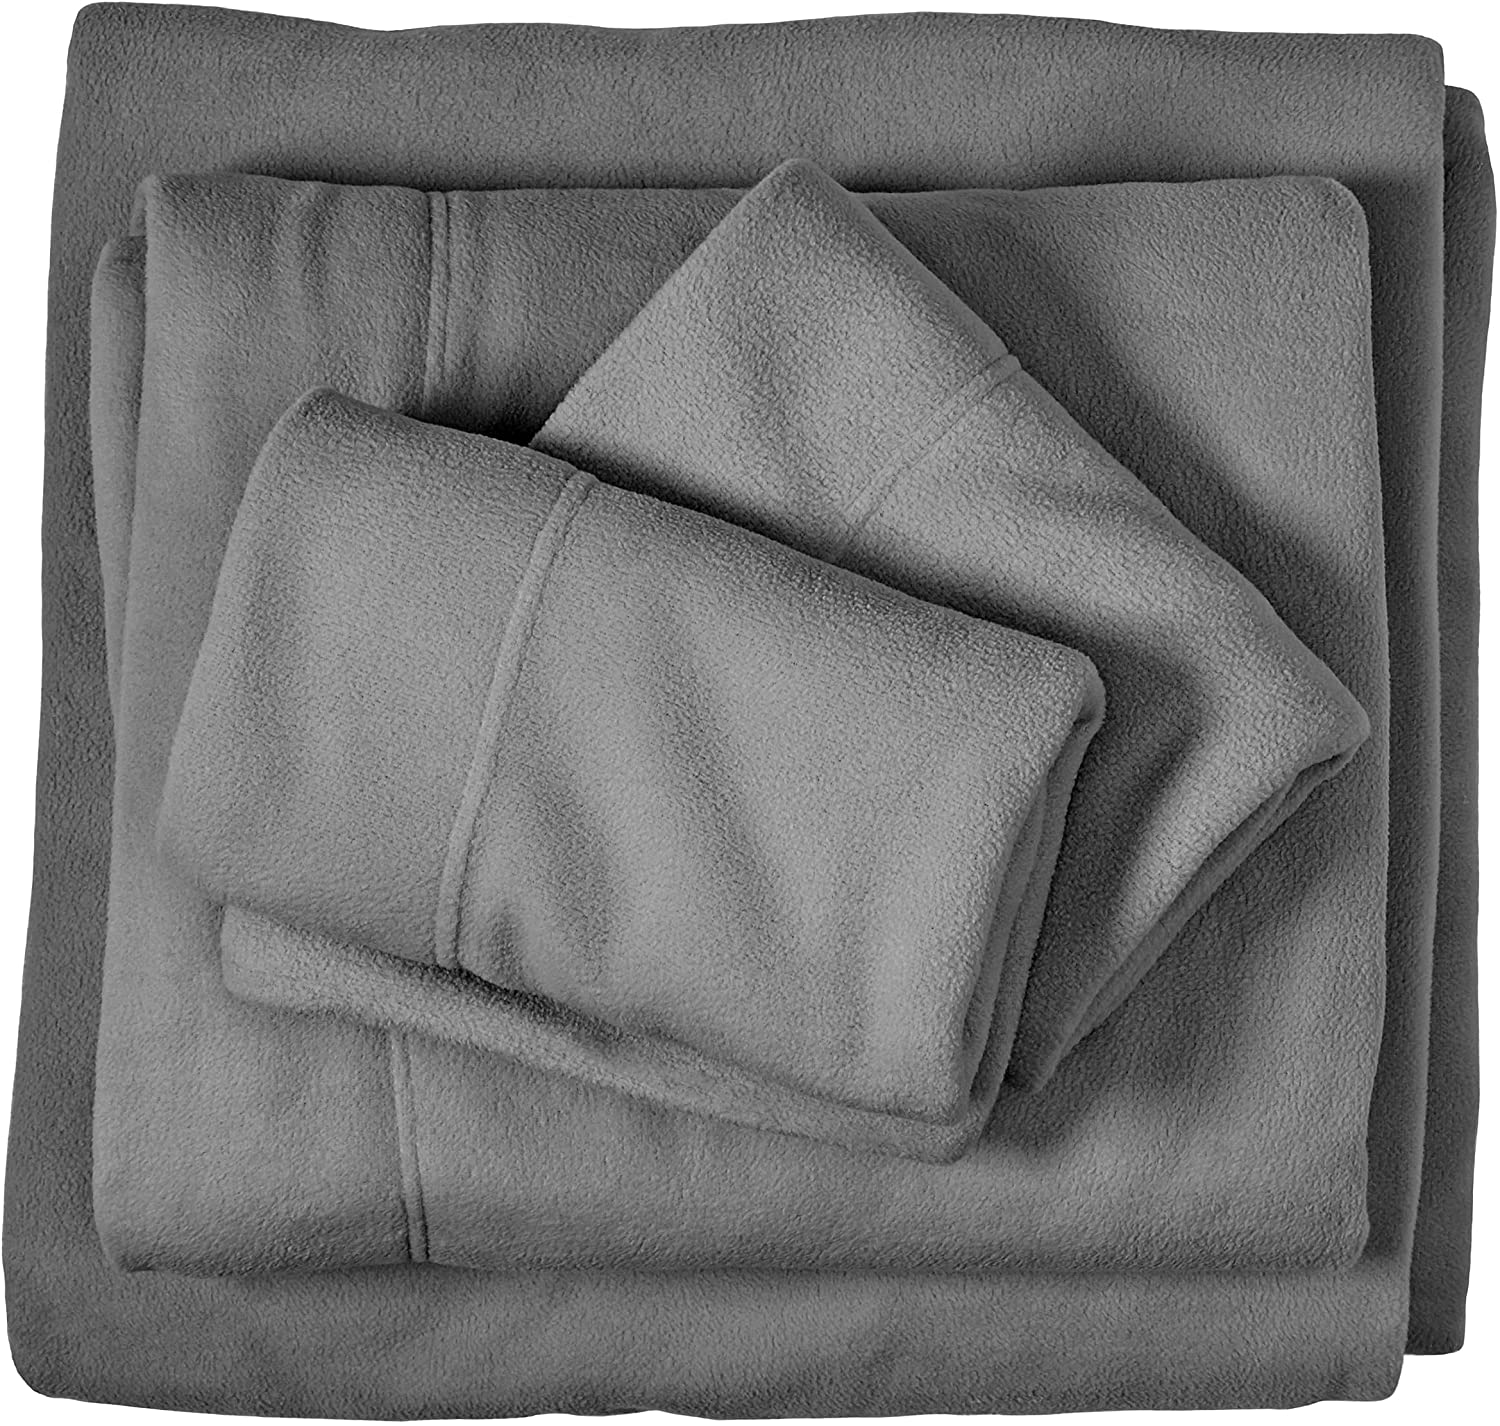 Bare Home Super Soft Fleece Sheet Set